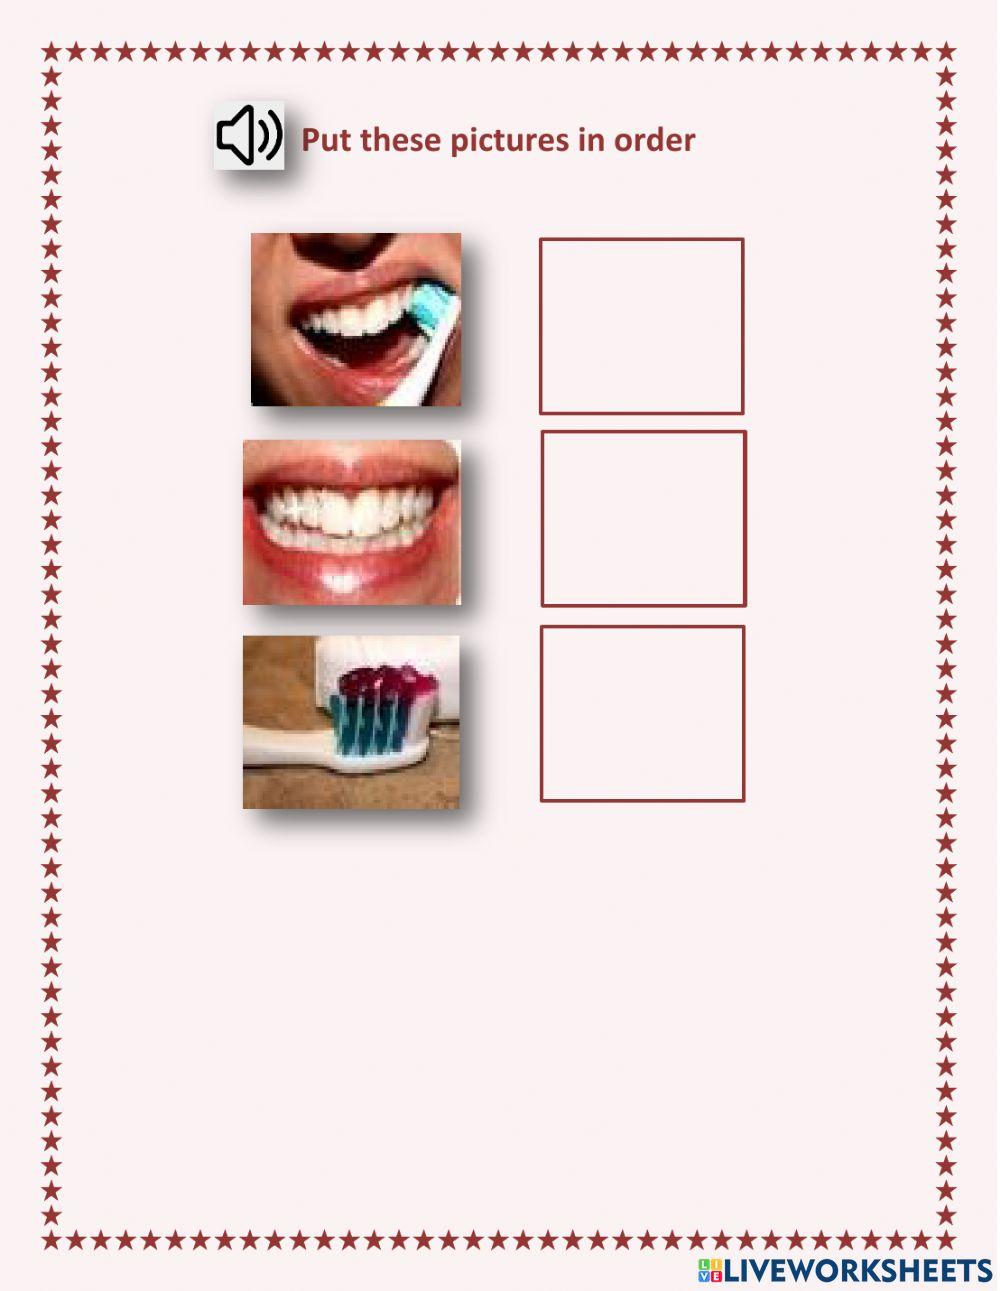 Sequencing - smile - brushing teeth